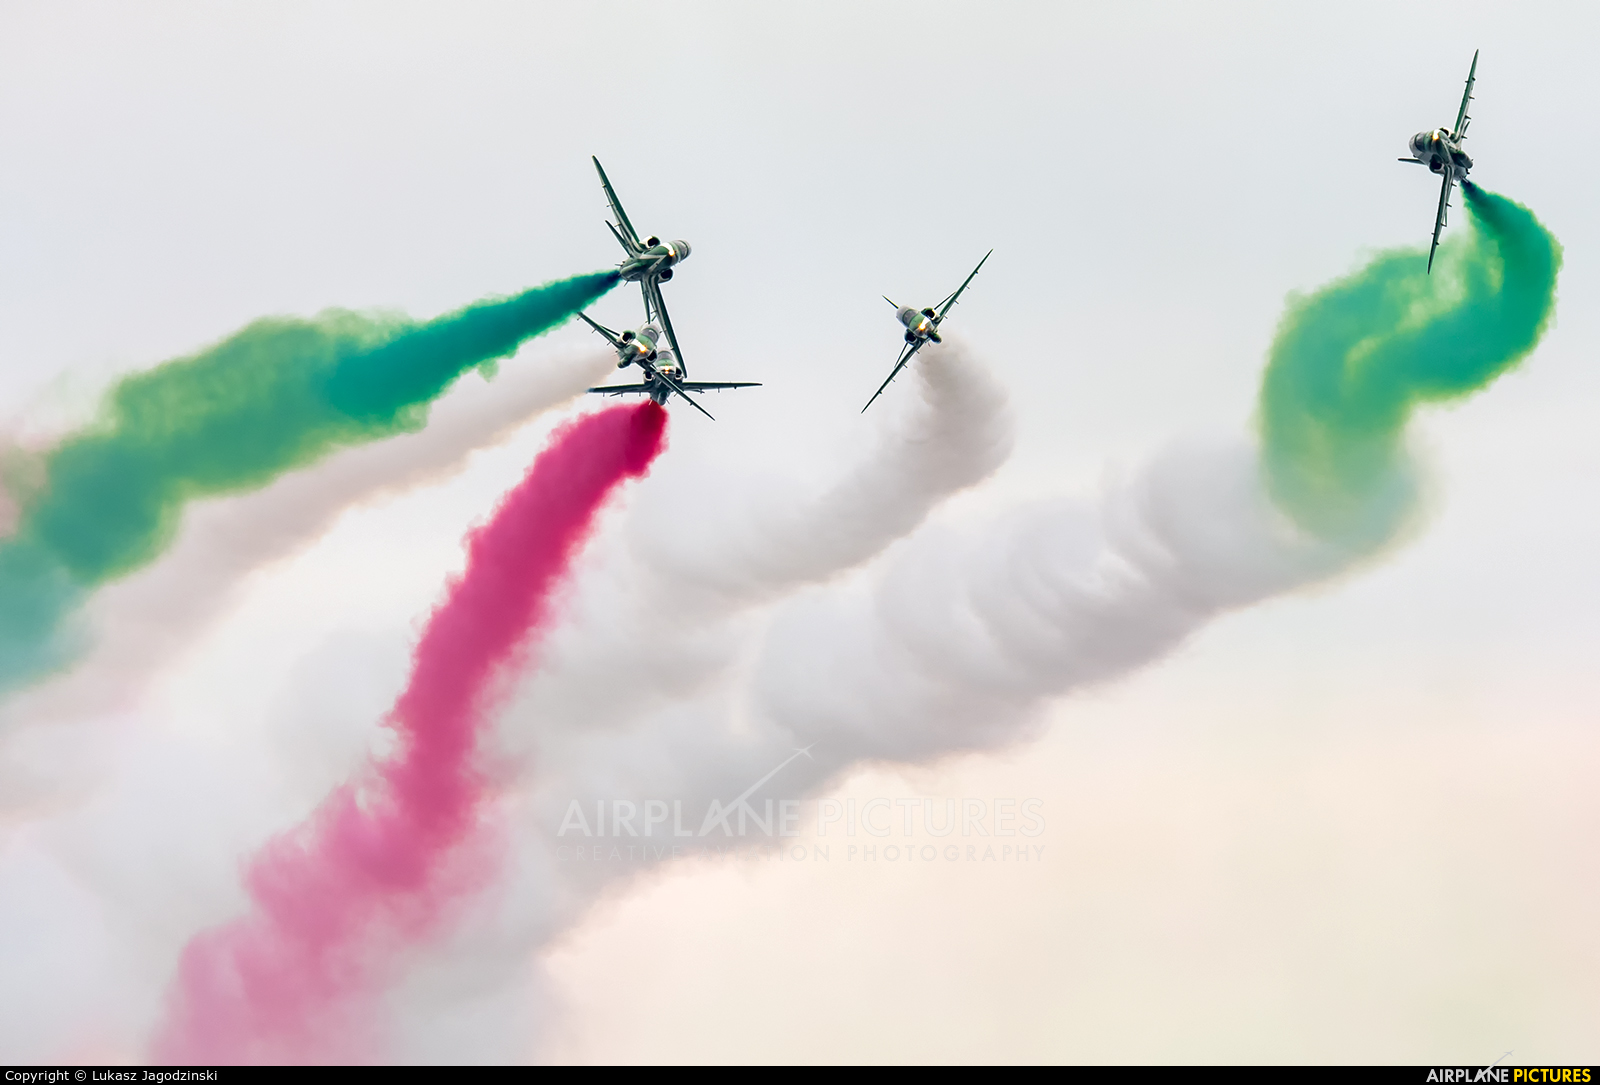 Saudi Arabia - Air Force: Saudi Hawks 8817 aircraft at Gdynia- Babie Doły (Oksywie)